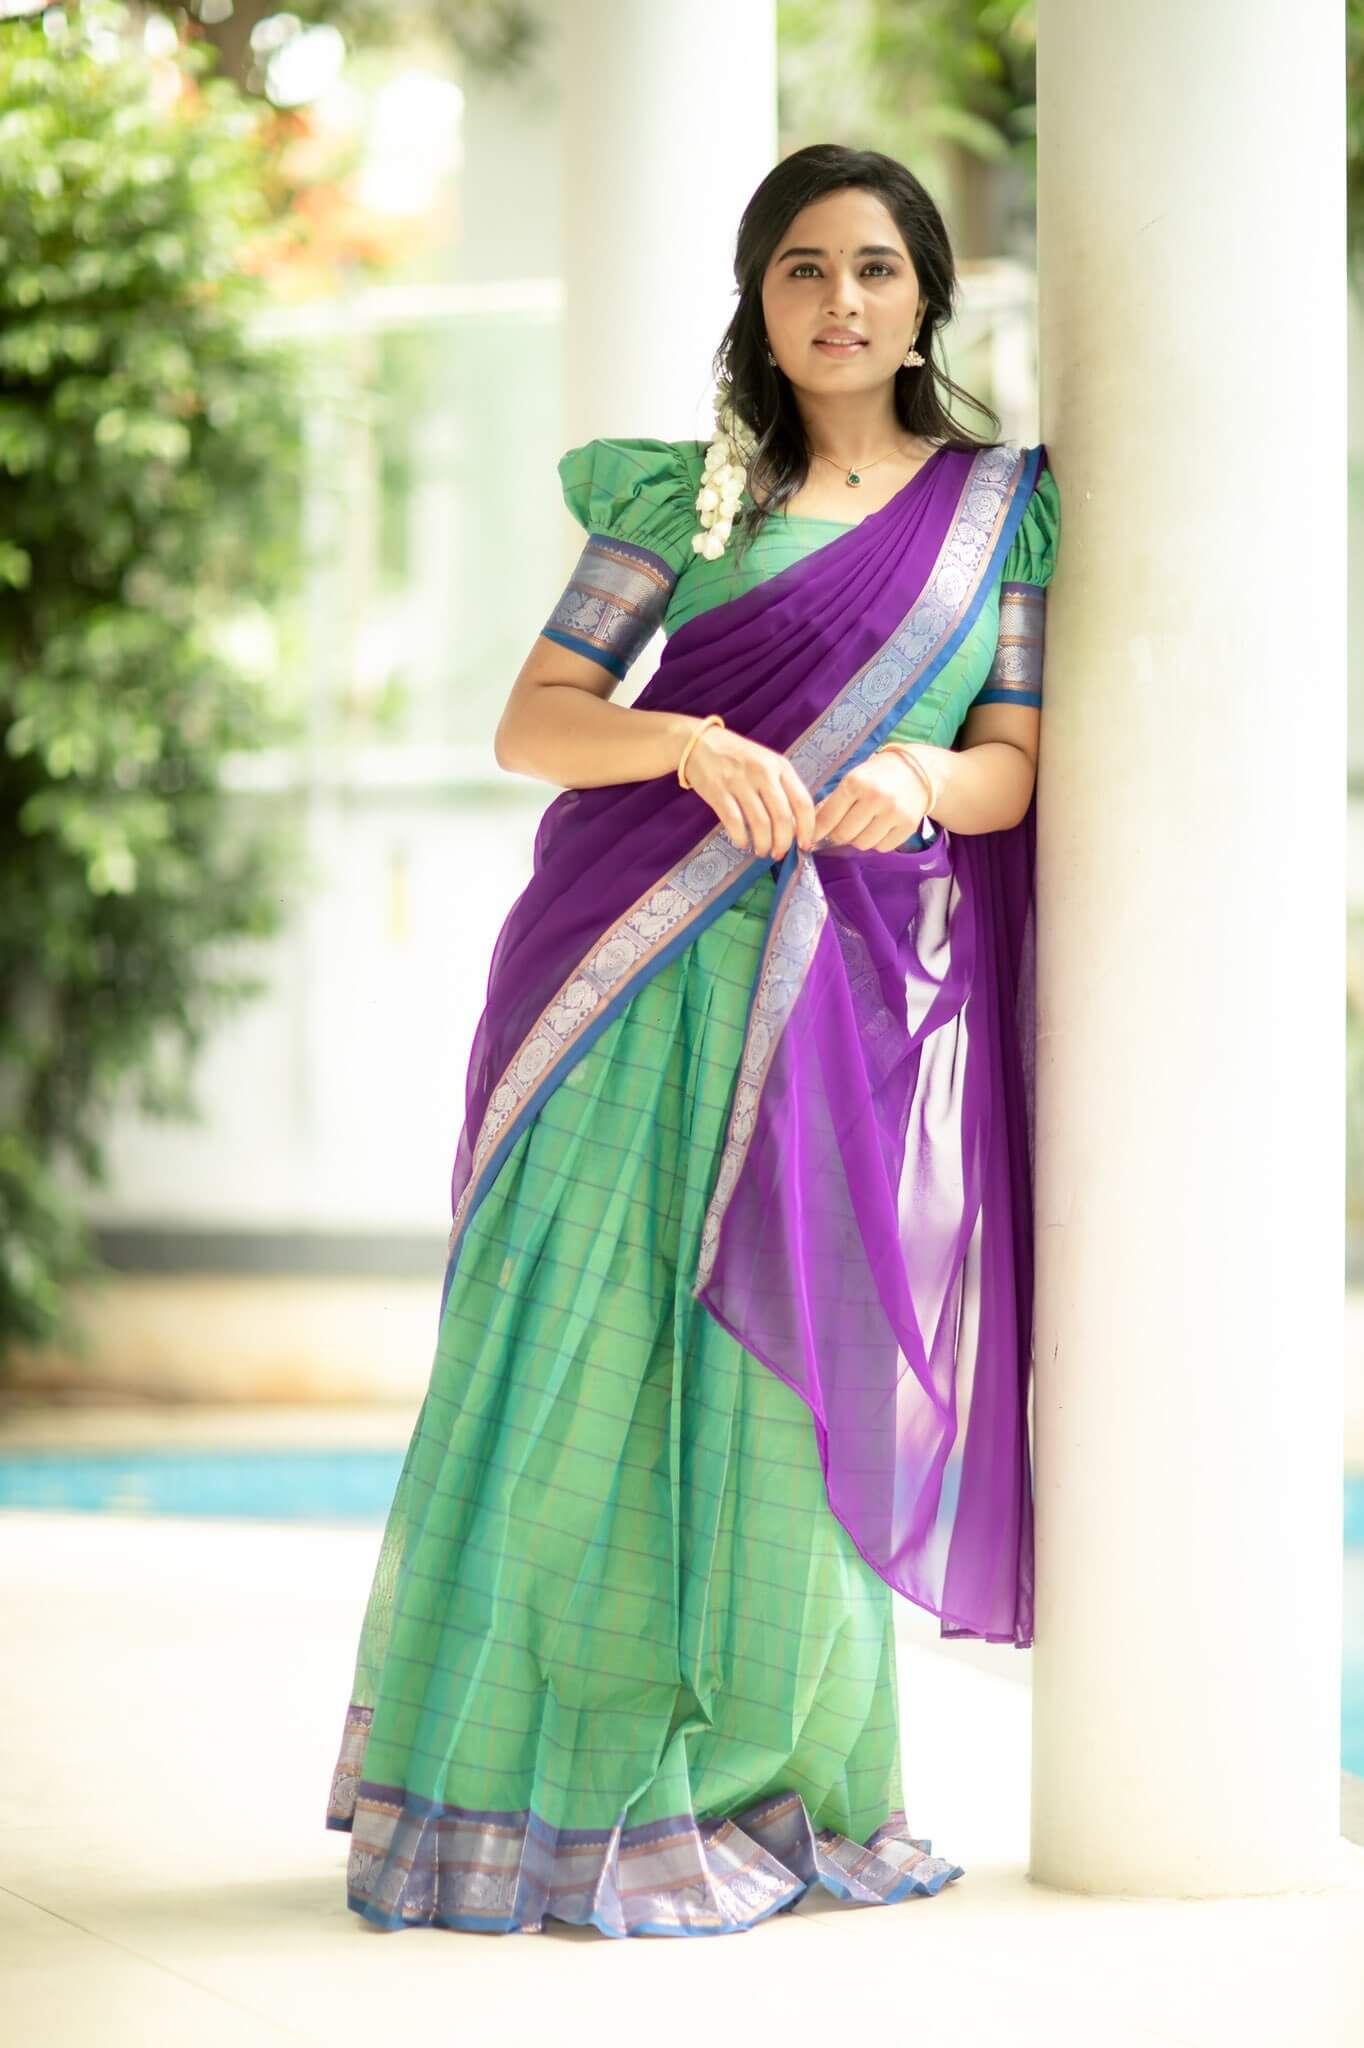 Srushti Dange Traditional Look In Green Check Lehenga Choli With Purple Dupatta